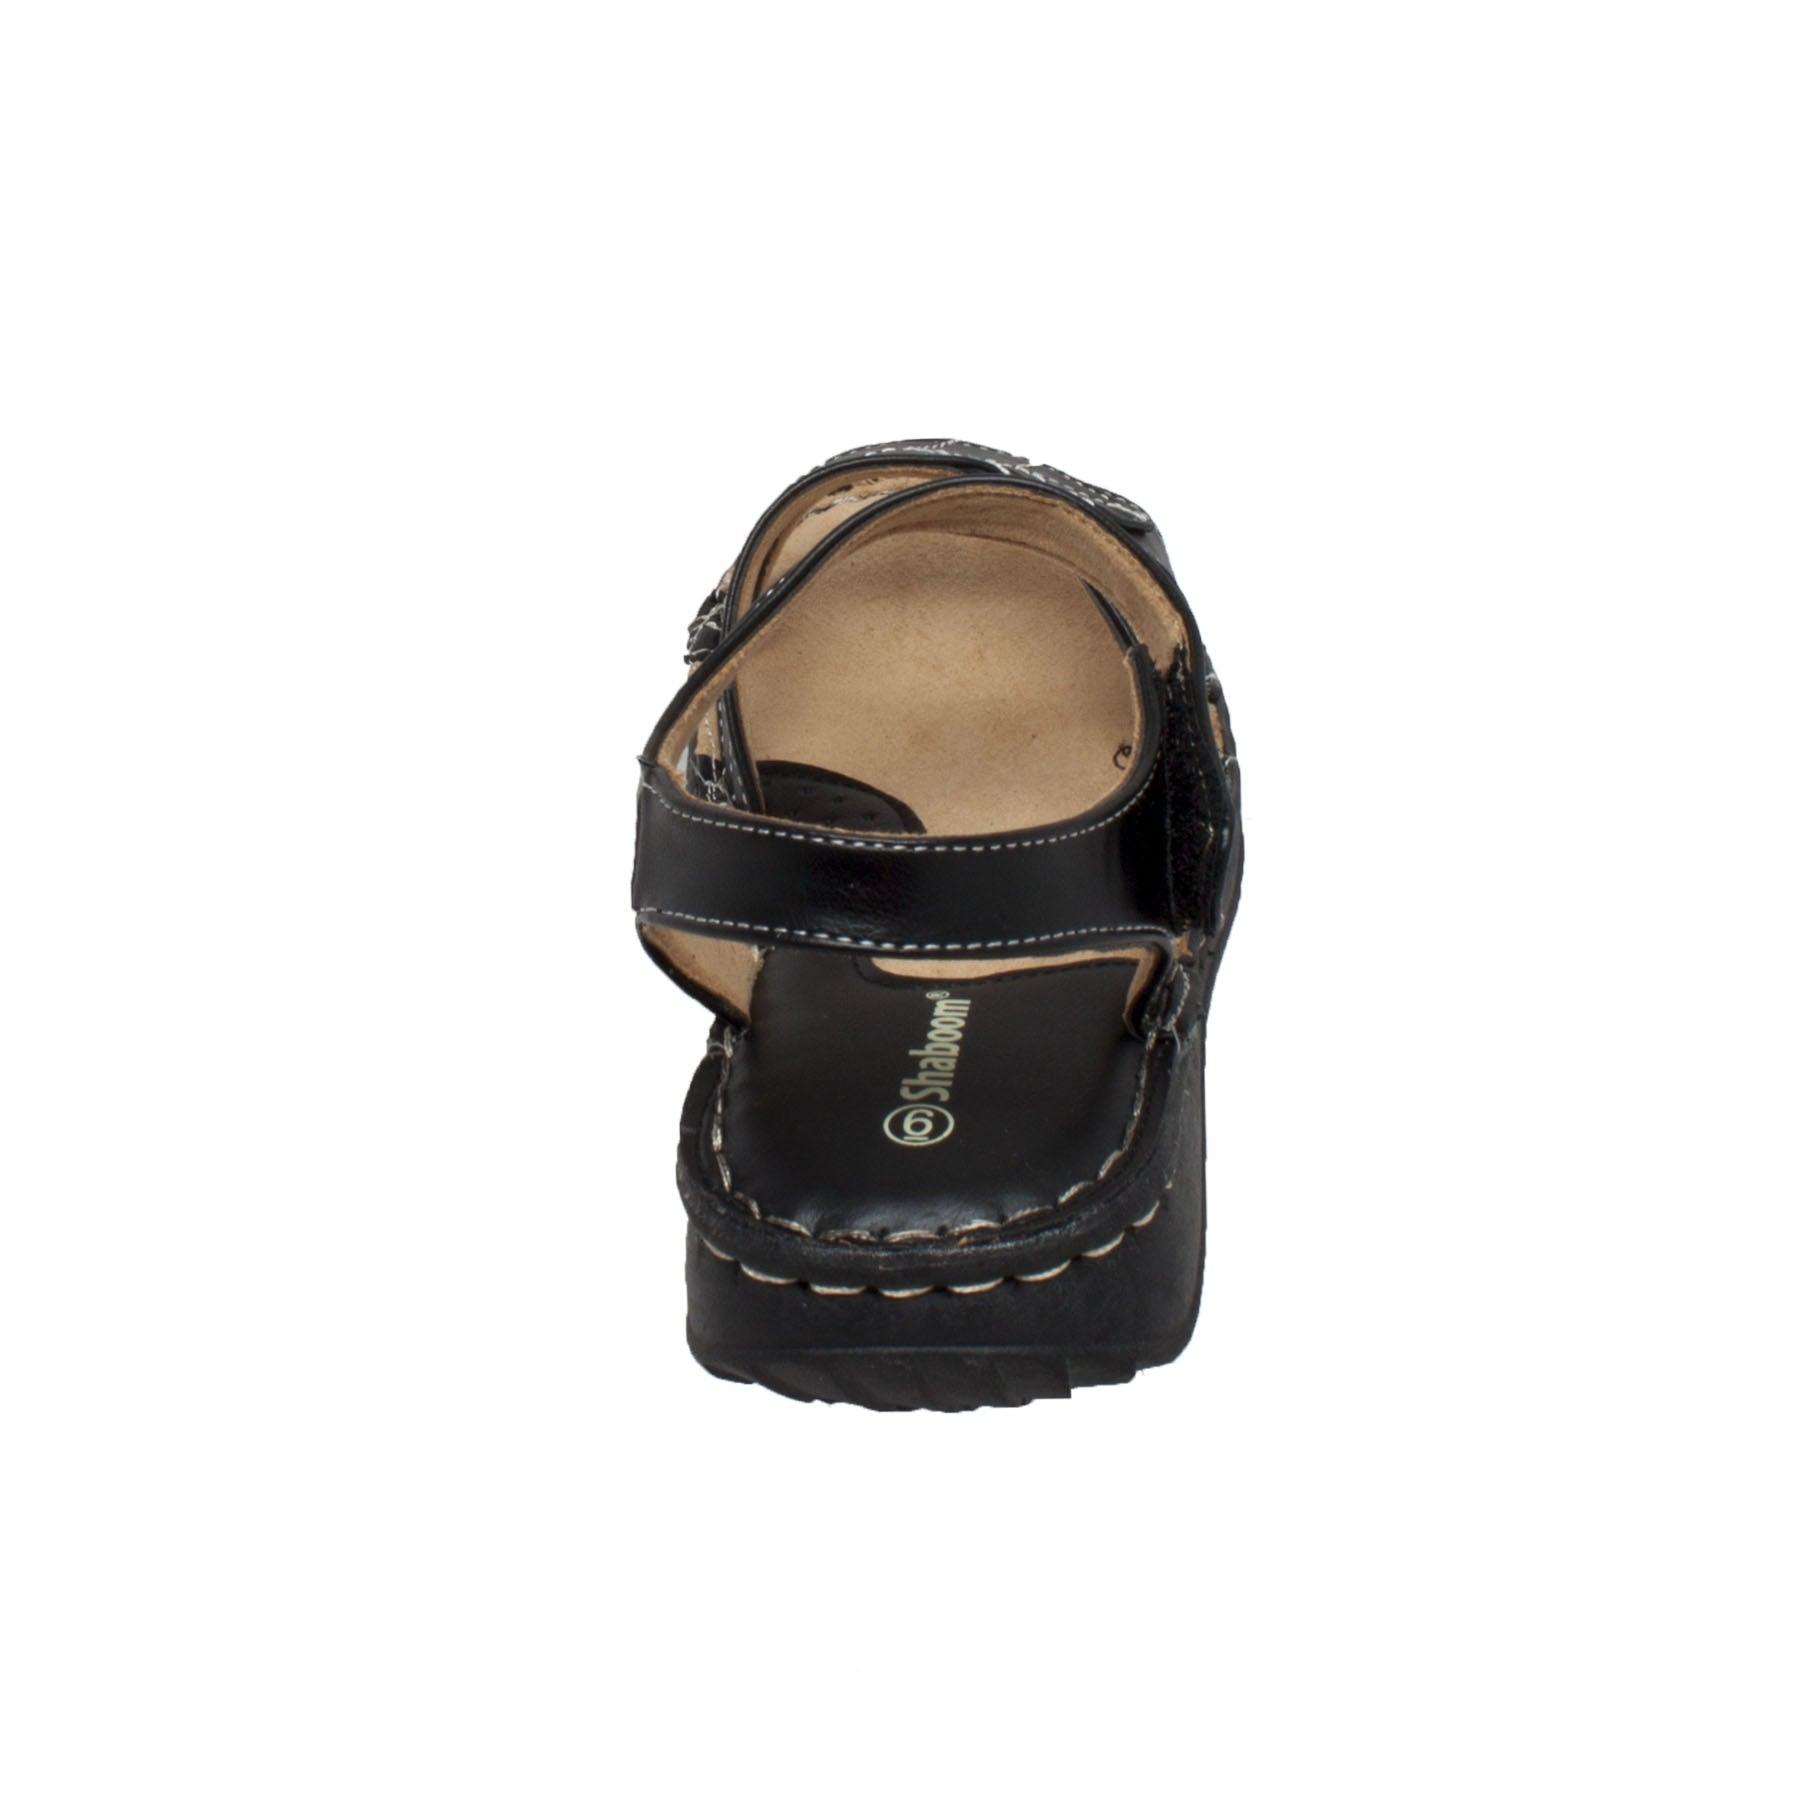 Shaboom Women's Comfort Sandal with Ankle Strap Black - Flyclothing LLC